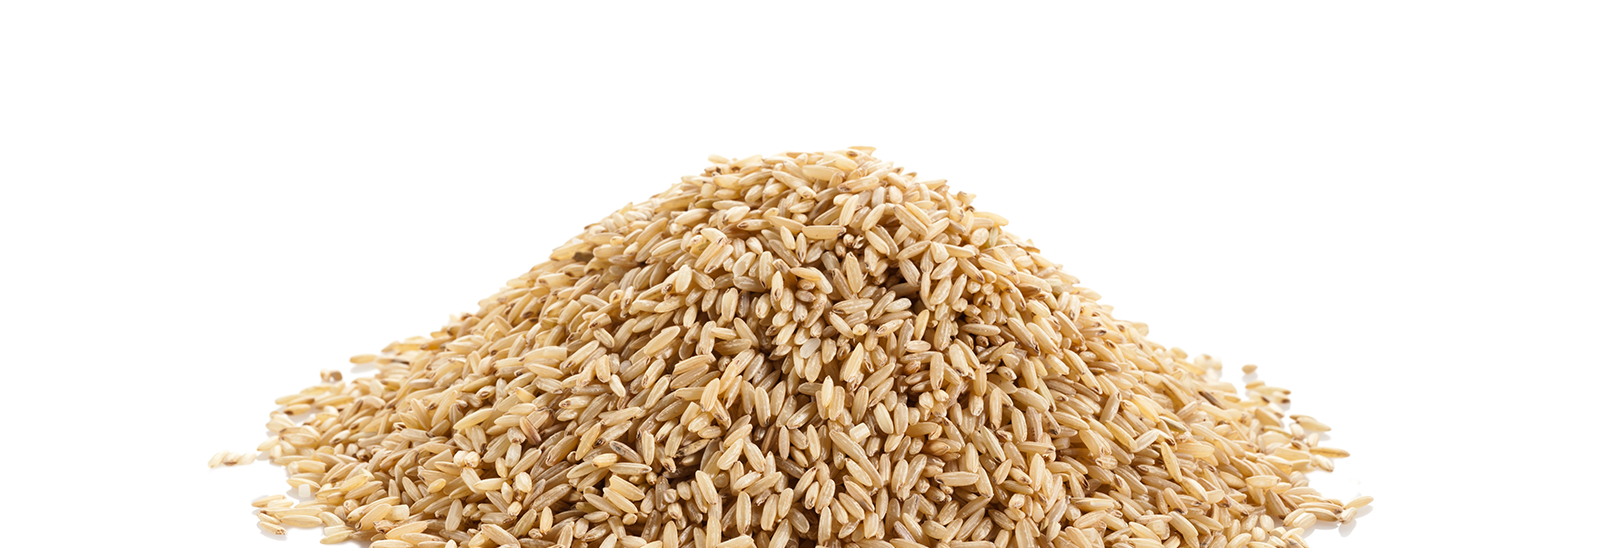 Un montón de arroz integral